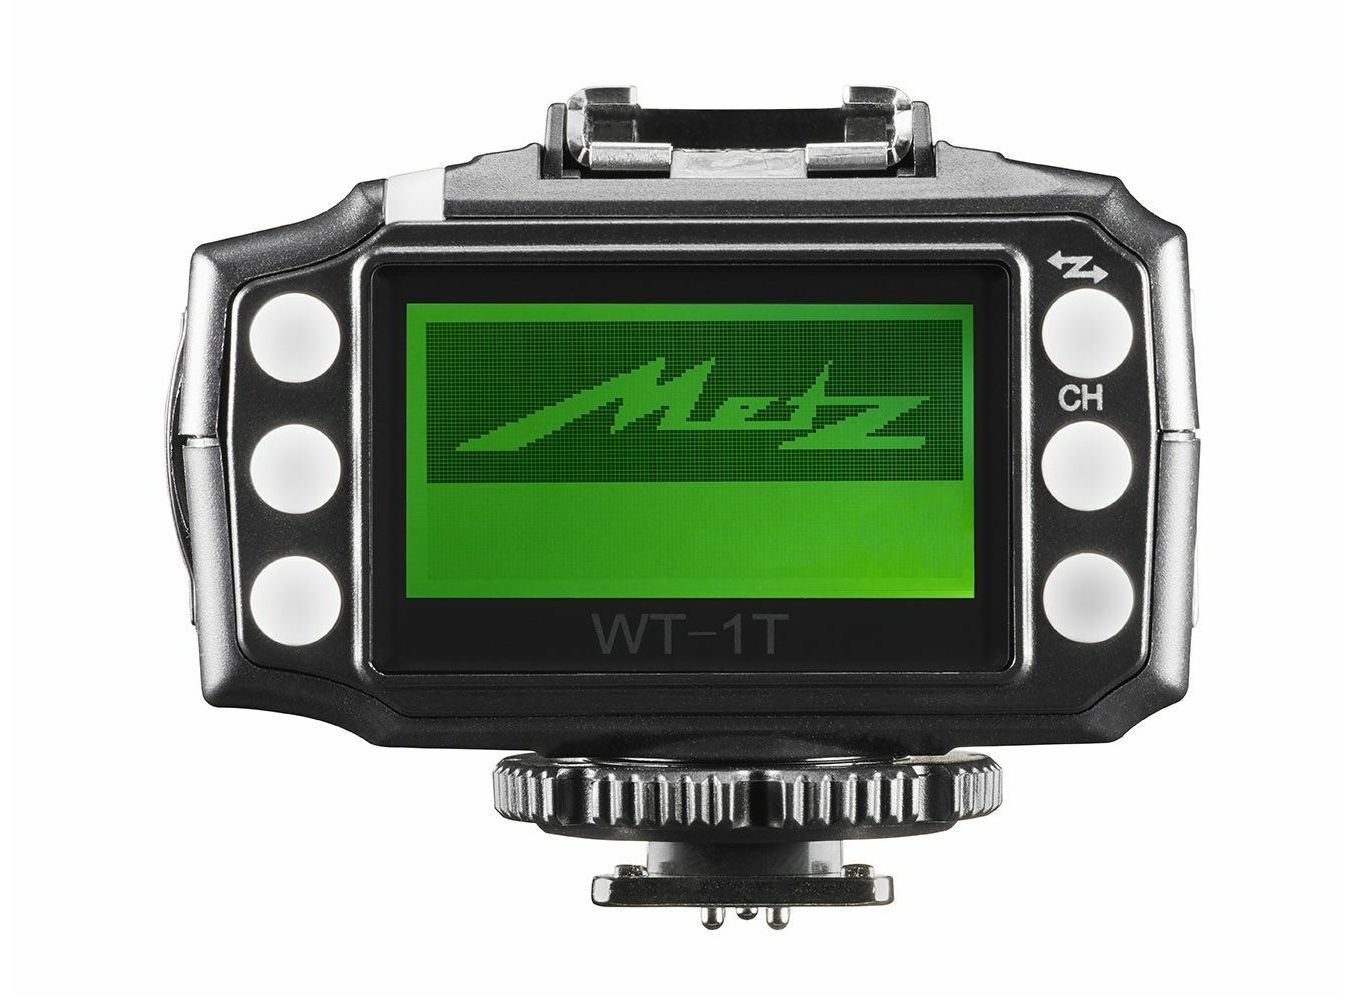 Metz WT-1TN TTL HSS Radio odašiljač za Nikon Flash wireless Trigger Transceiver okidač za bljeskalicu